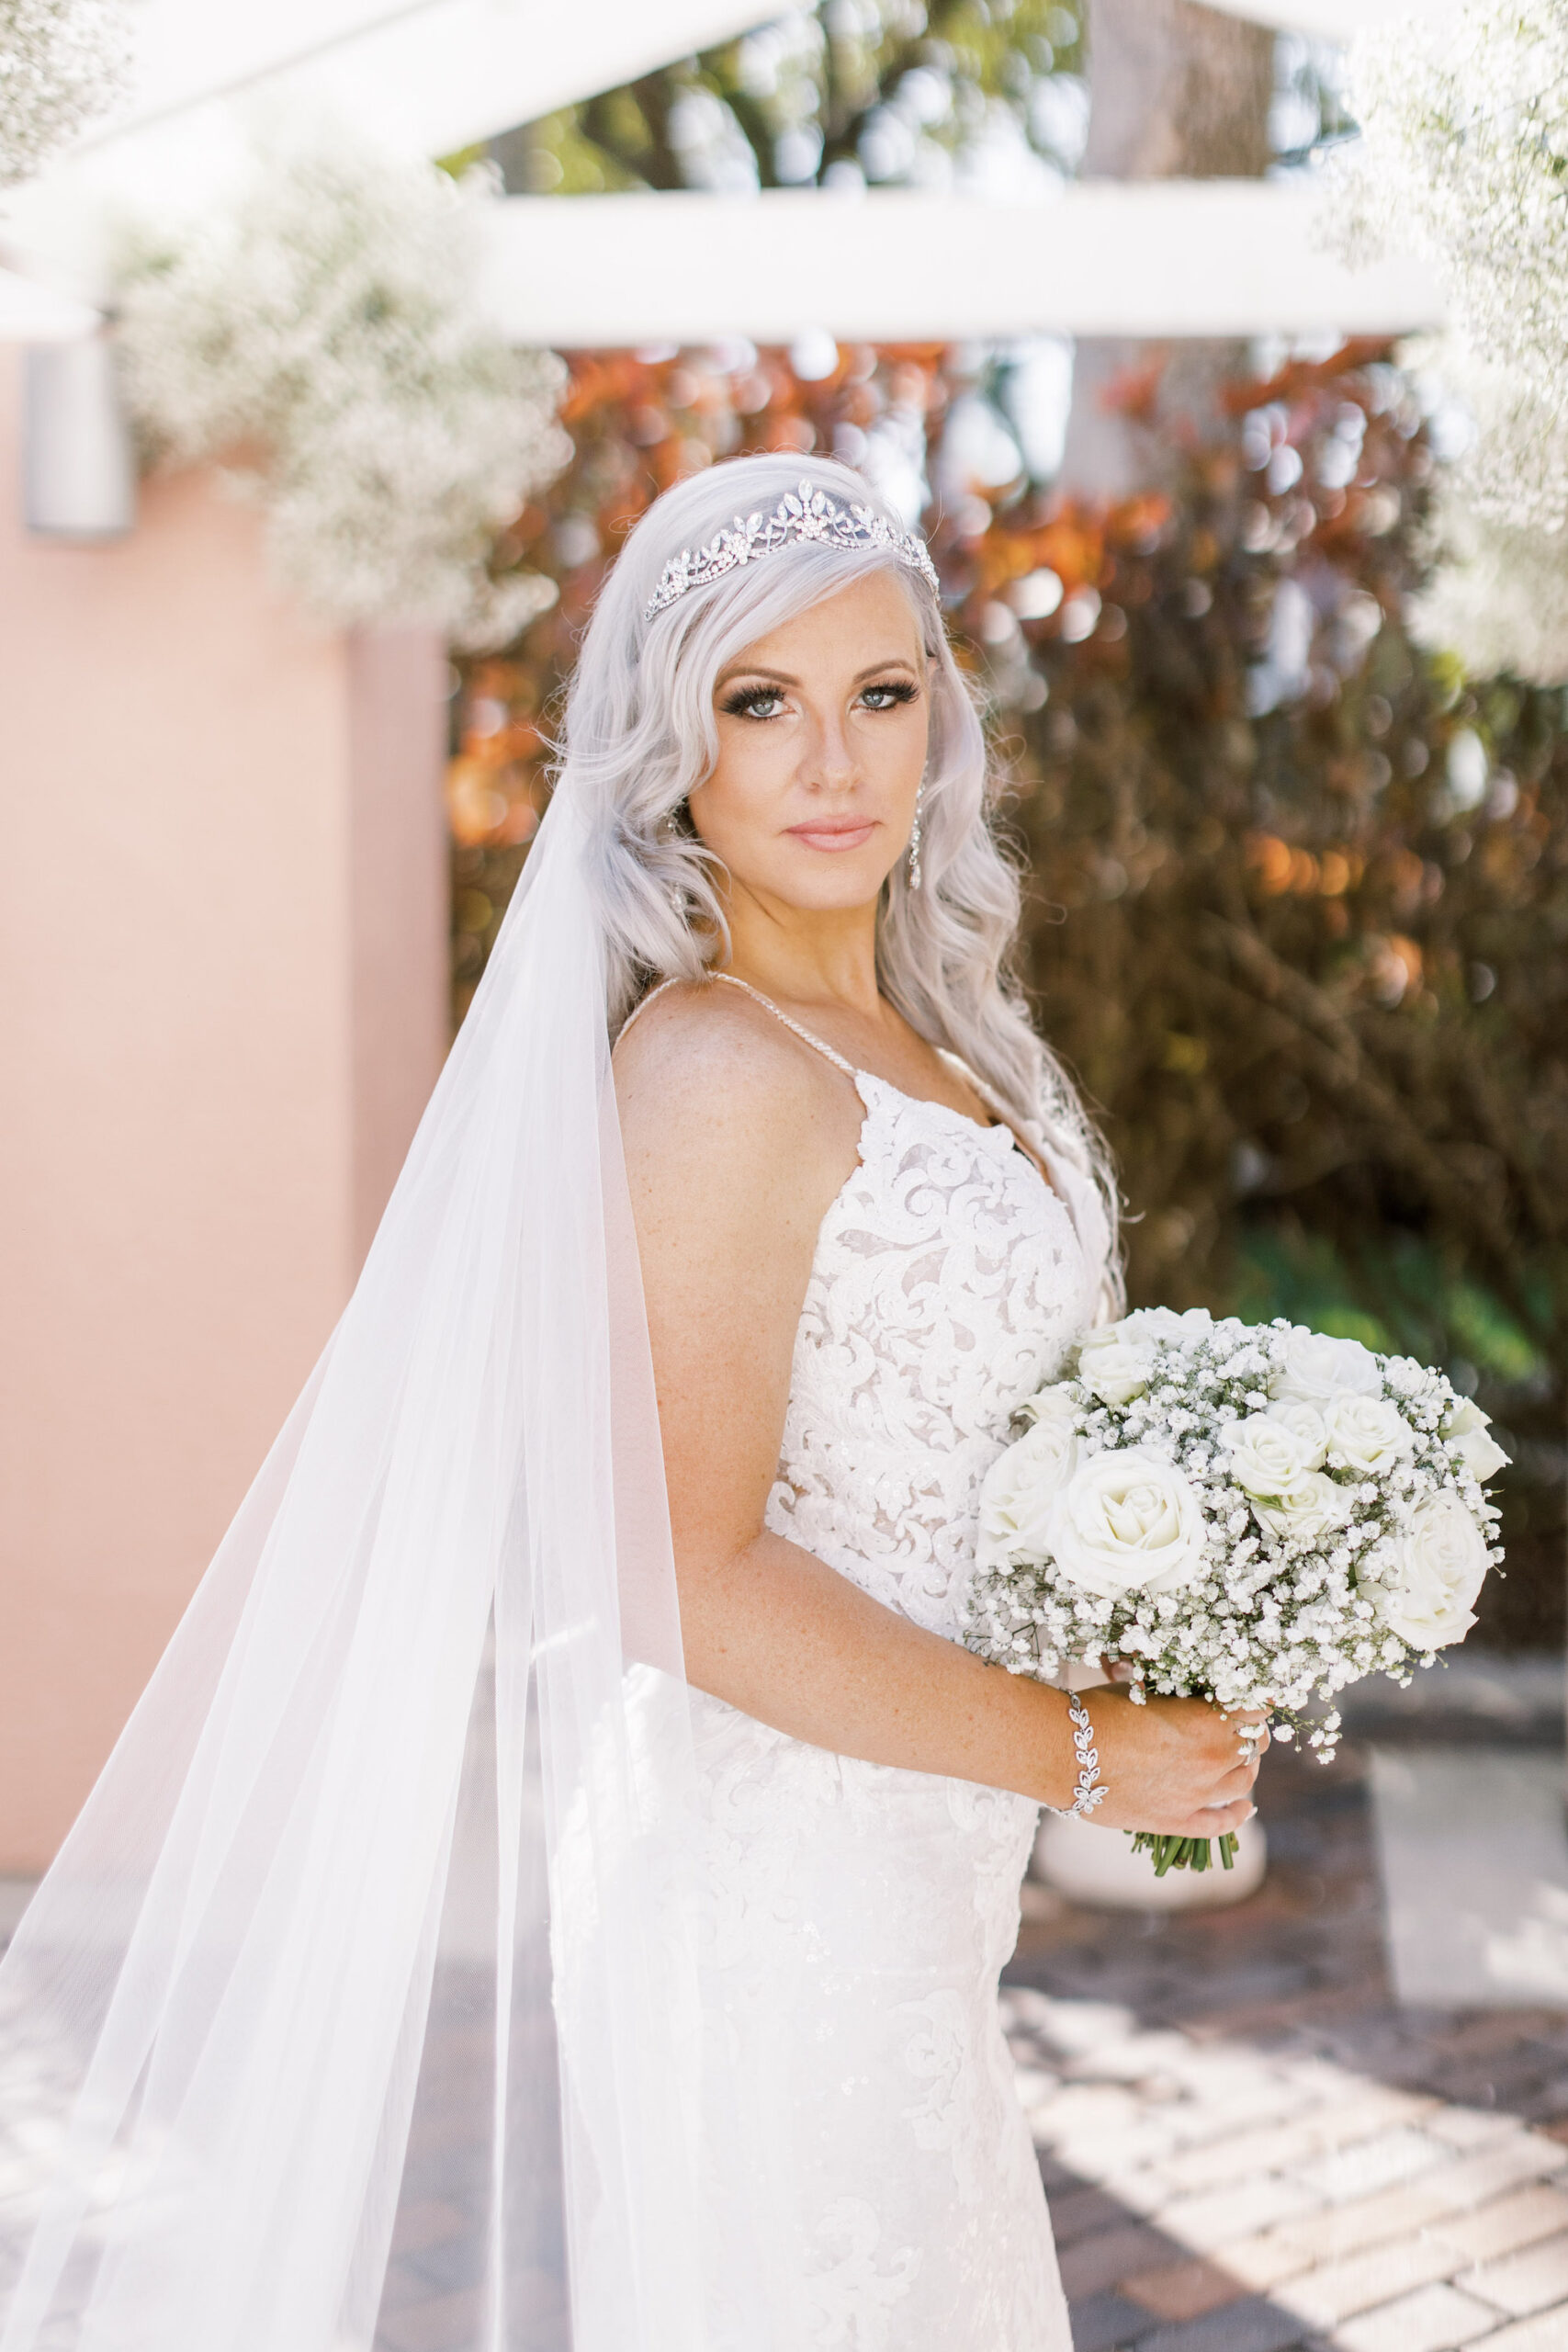 Romantic Bridal Wedding Portrait | White Rose and Baby's Breath Bouquet | St. Petersburg Wedding Florist Bruce Wayne Florals | Hair and Makeup Artist Femme Akoi Beauty Studio